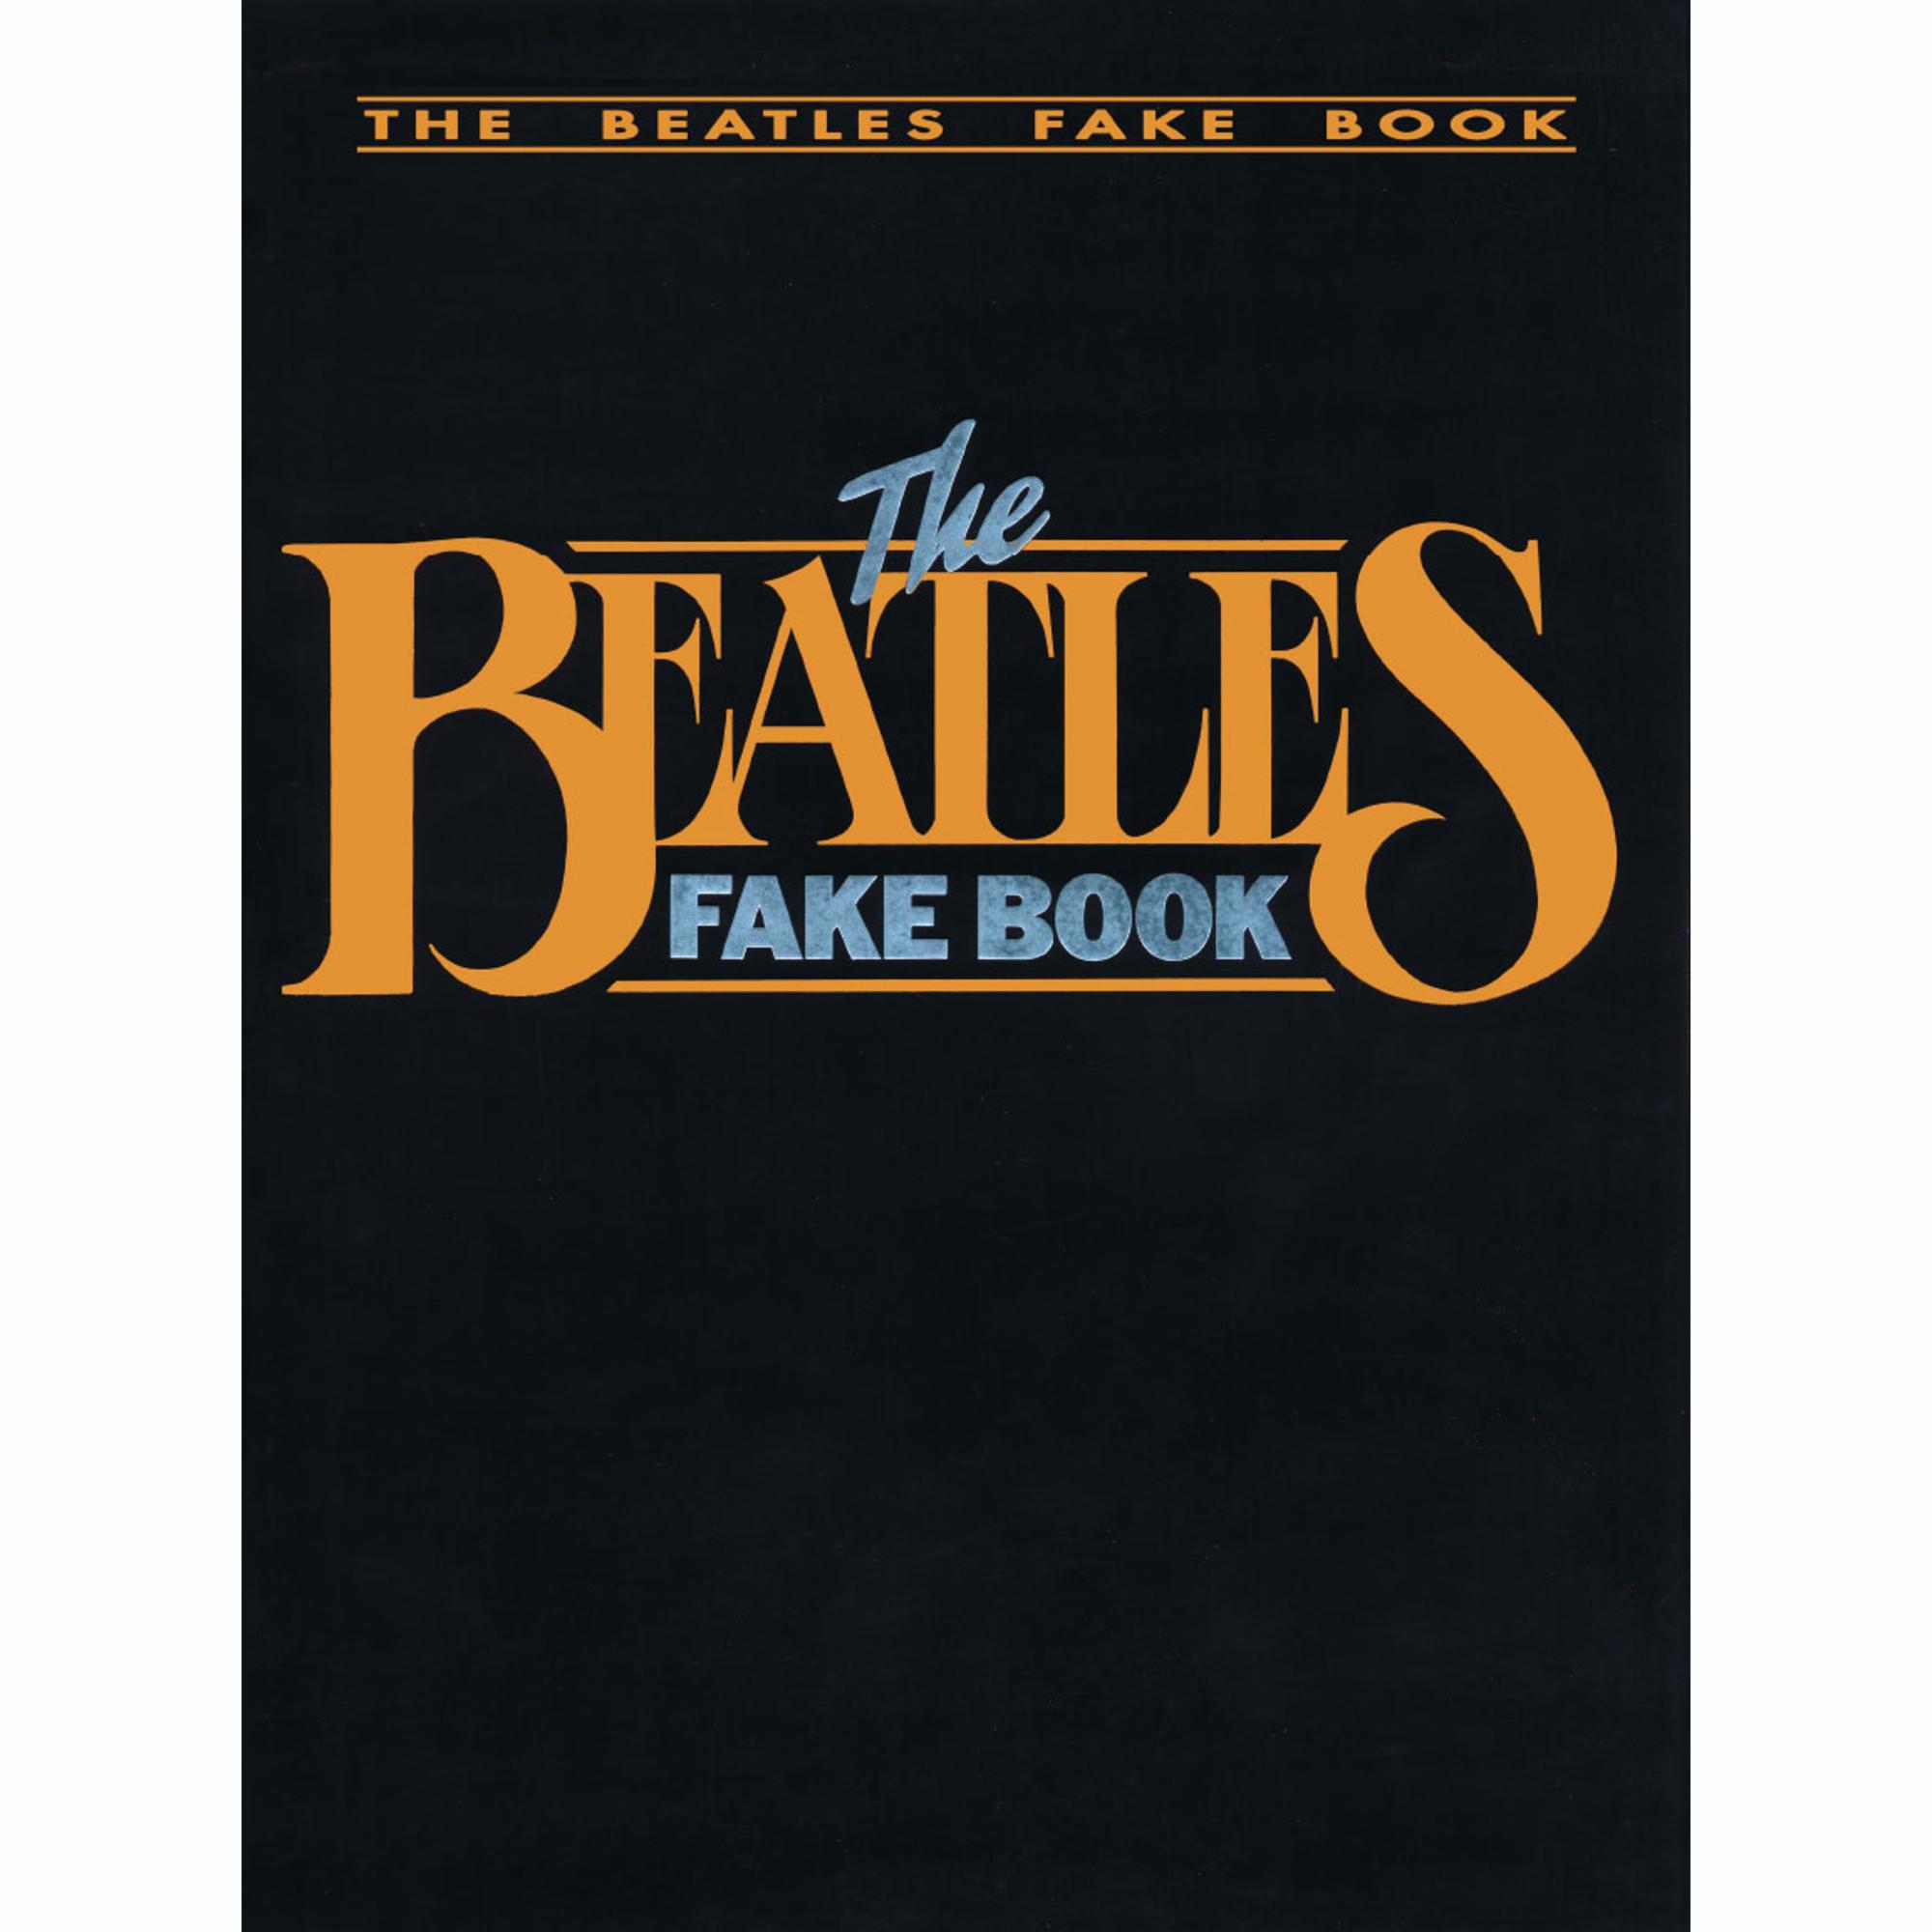 The Beatles Fake Book